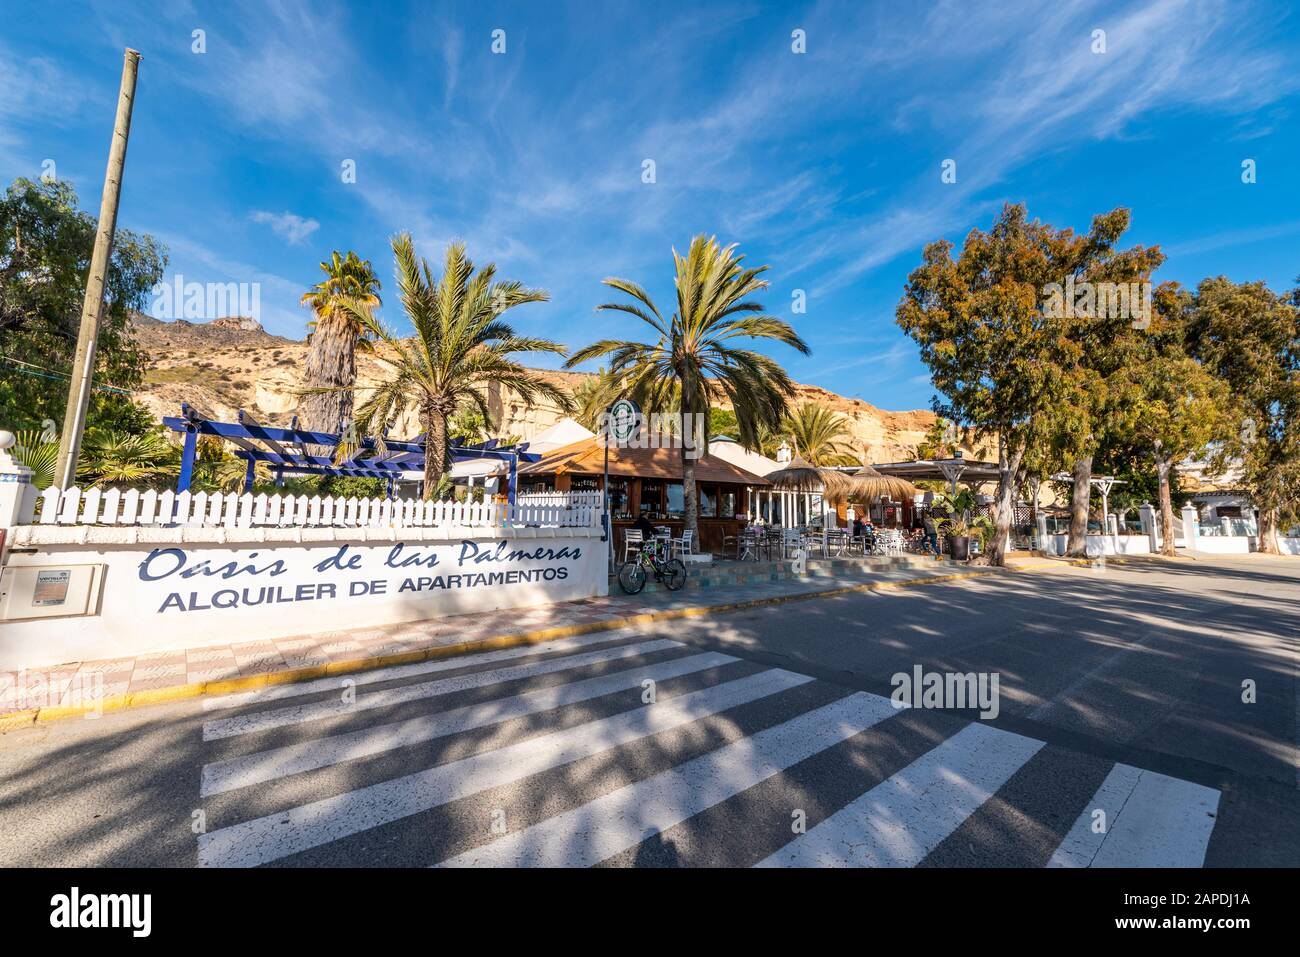 Oasis de las Palmeras, Alquiler de Apartamentos near Erosiones de Bolnuevo, Region de Murcia, Costa Calida, Spain. Tourist spot Stock Photo